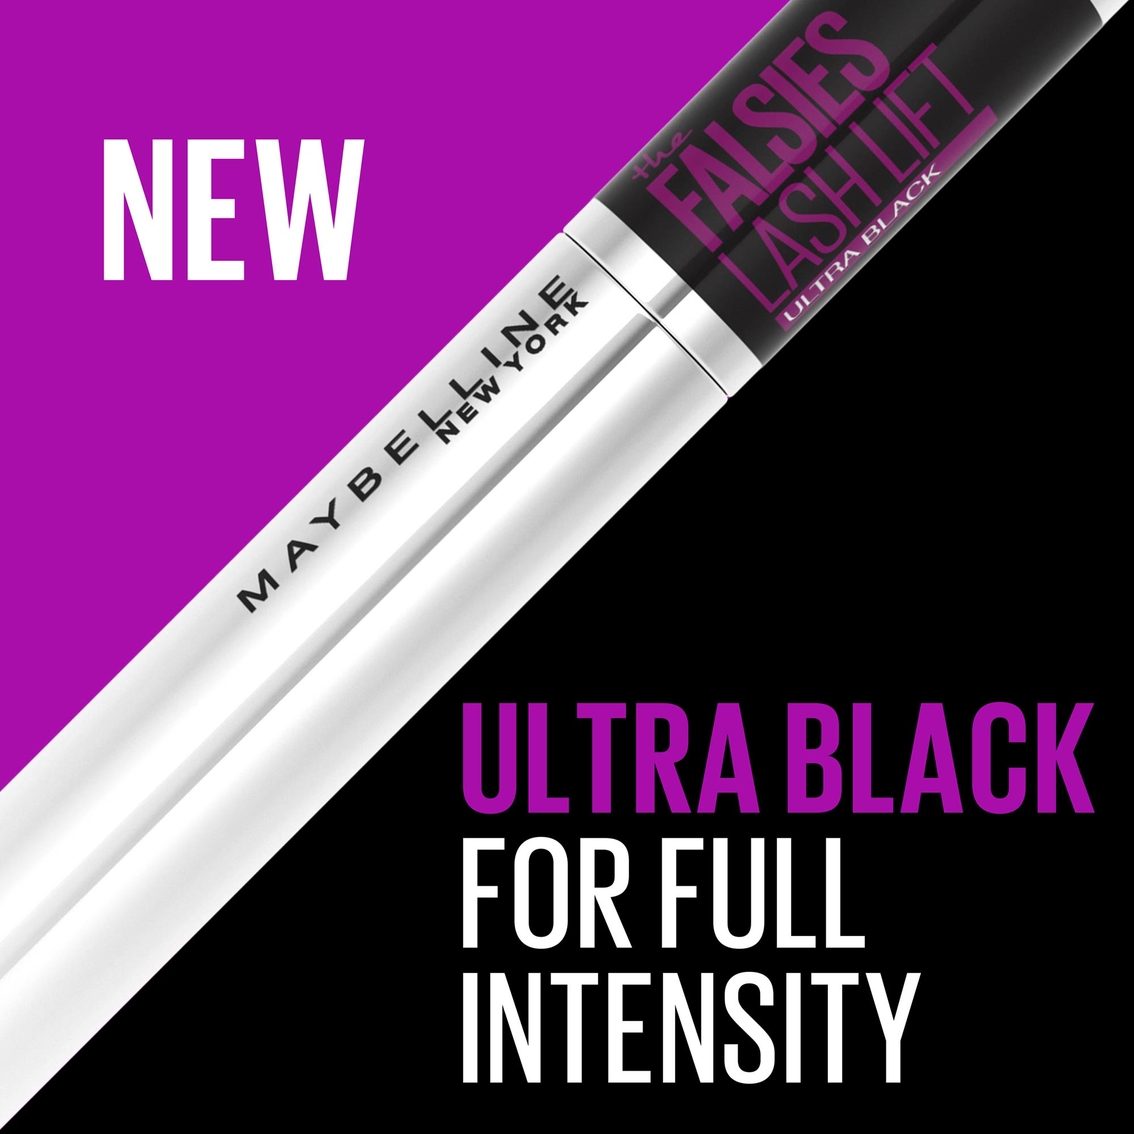 Maybelline New York Falsies Lash Lift Ultra Black Mascara | Mascara |  Beauty & Health | Shop The Exchange